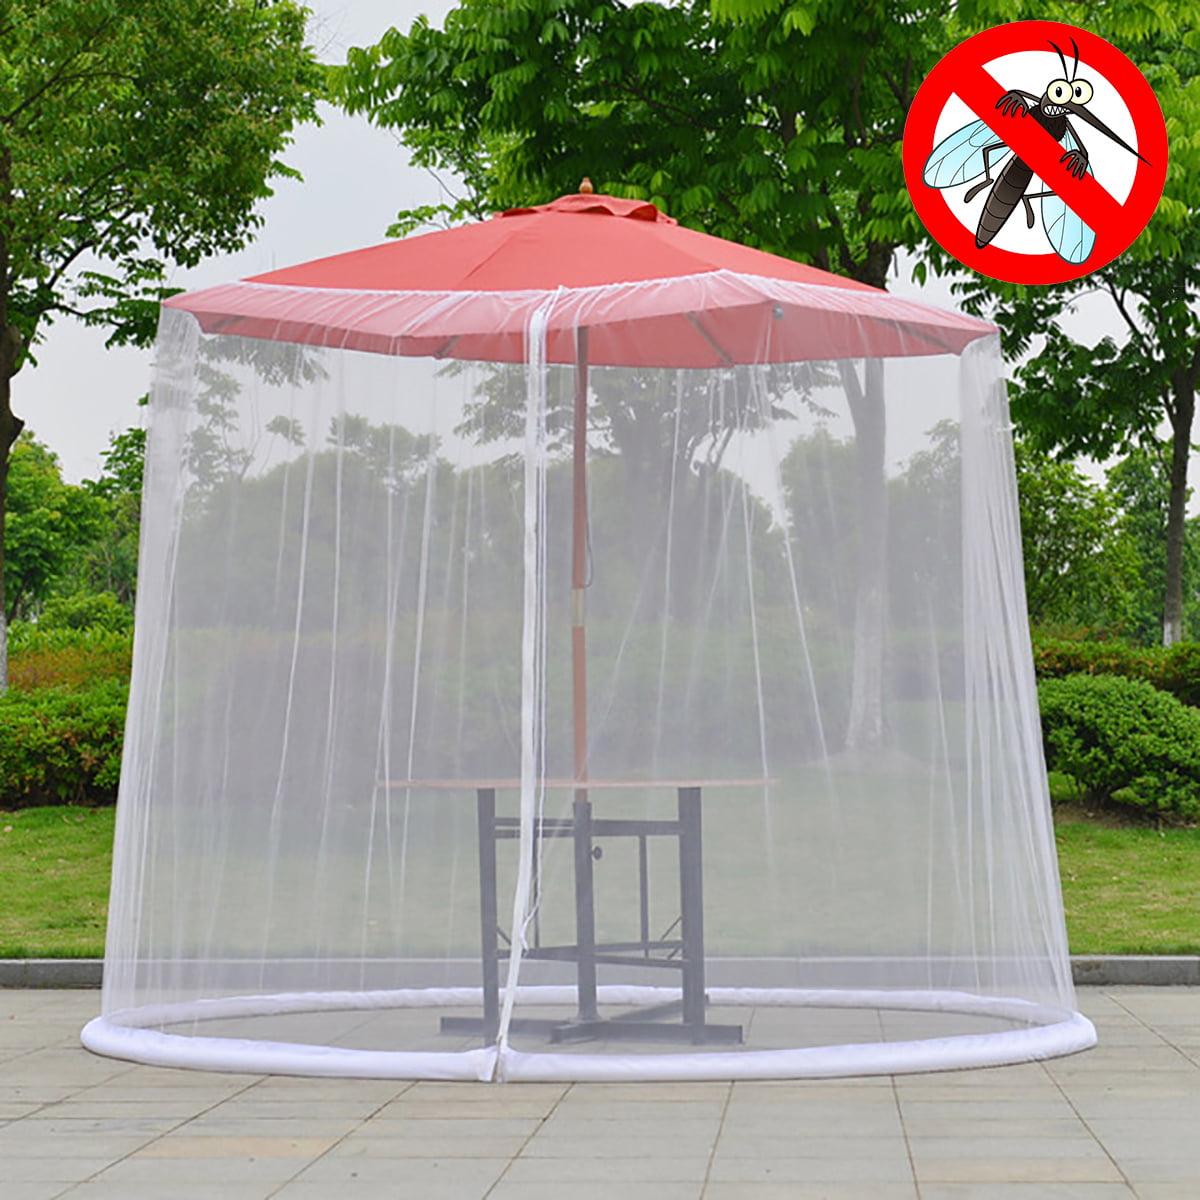 Garden Outdoor Patio Umbrella Screen Table Protect Mosquito Bug Netting Tent 9FT 